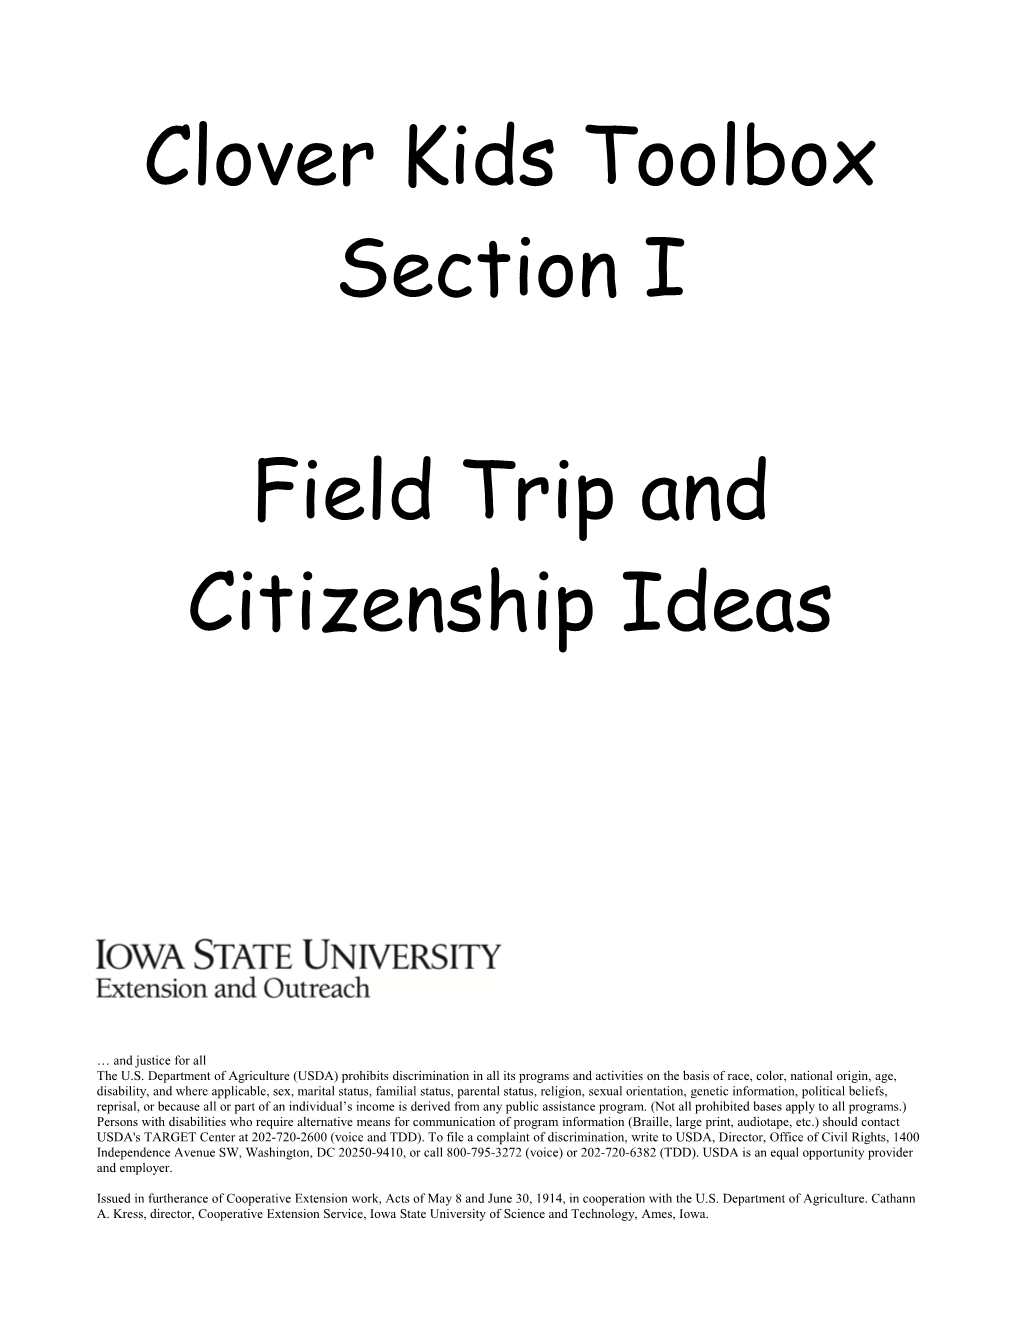 Field Trip and Citizenship Ideas